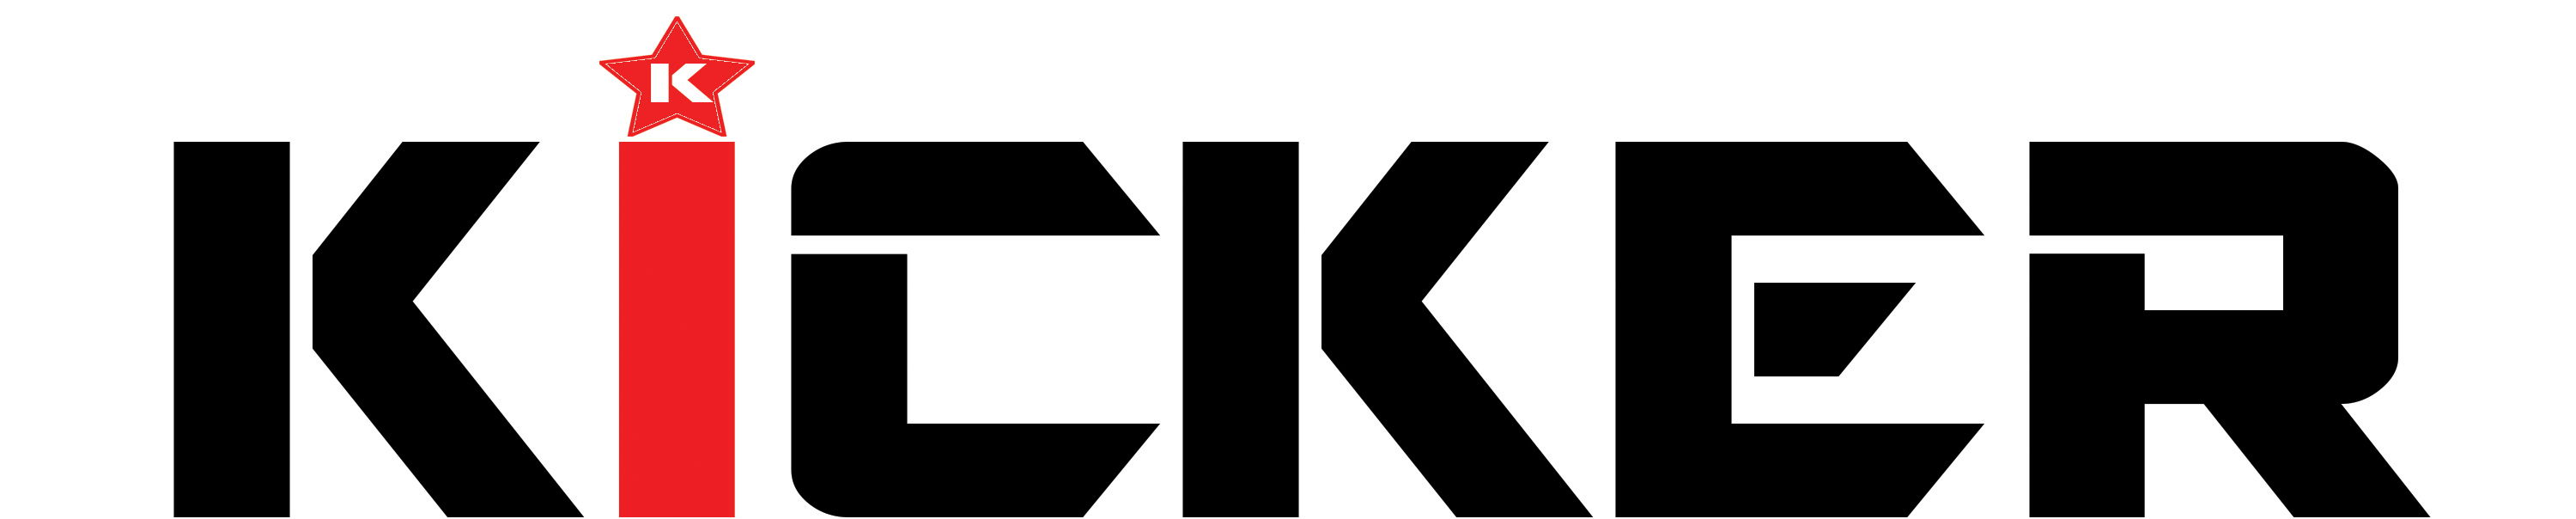 Kicker Logo development complete